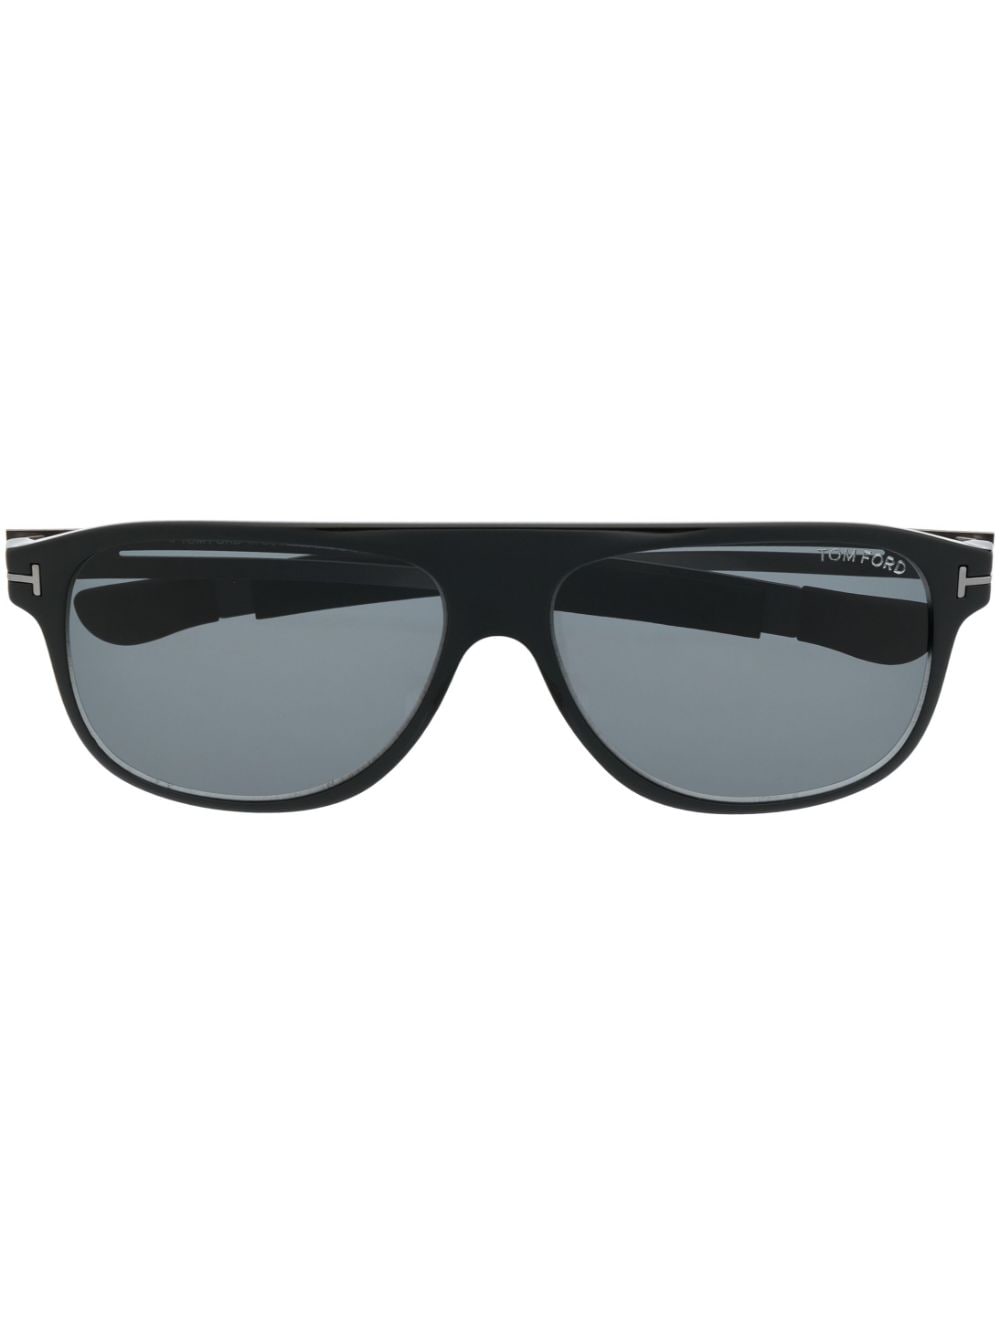 TOM FORD Eyewear square frame sunglasses - Black von TOM FORD Eyewear